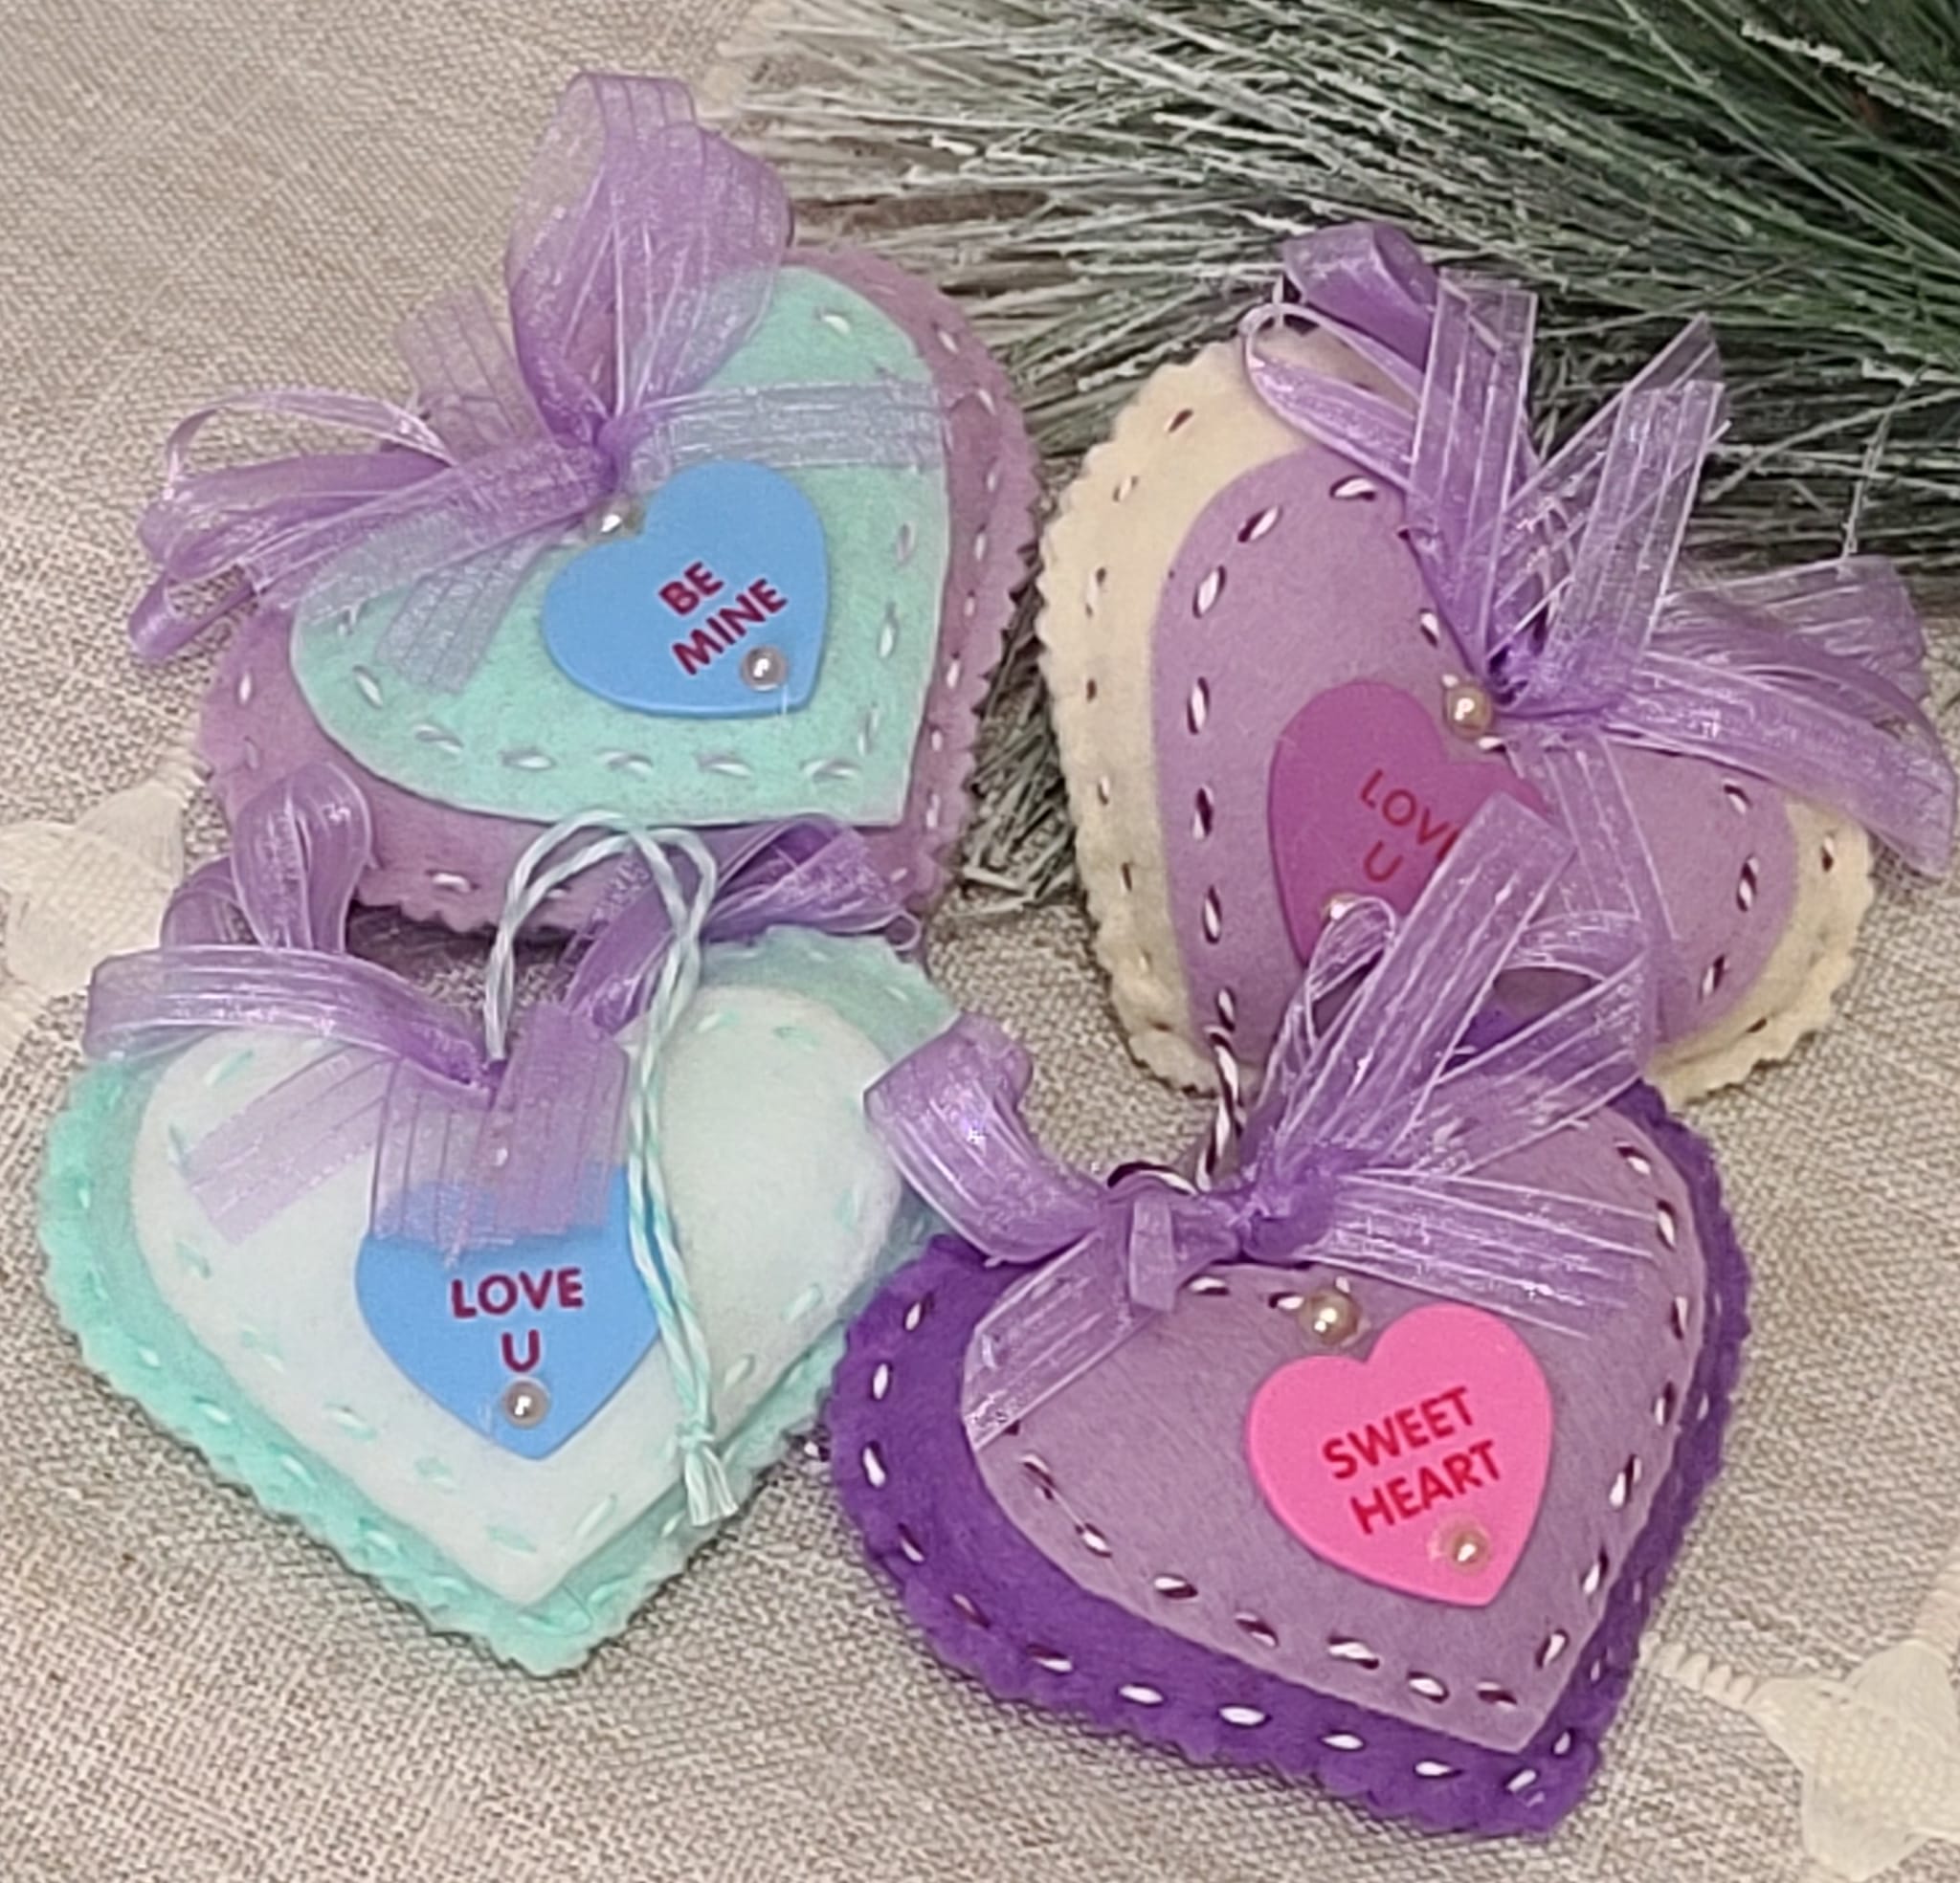 Sweet heart candy heart felt ornaments set of 4 valentine PURPLE